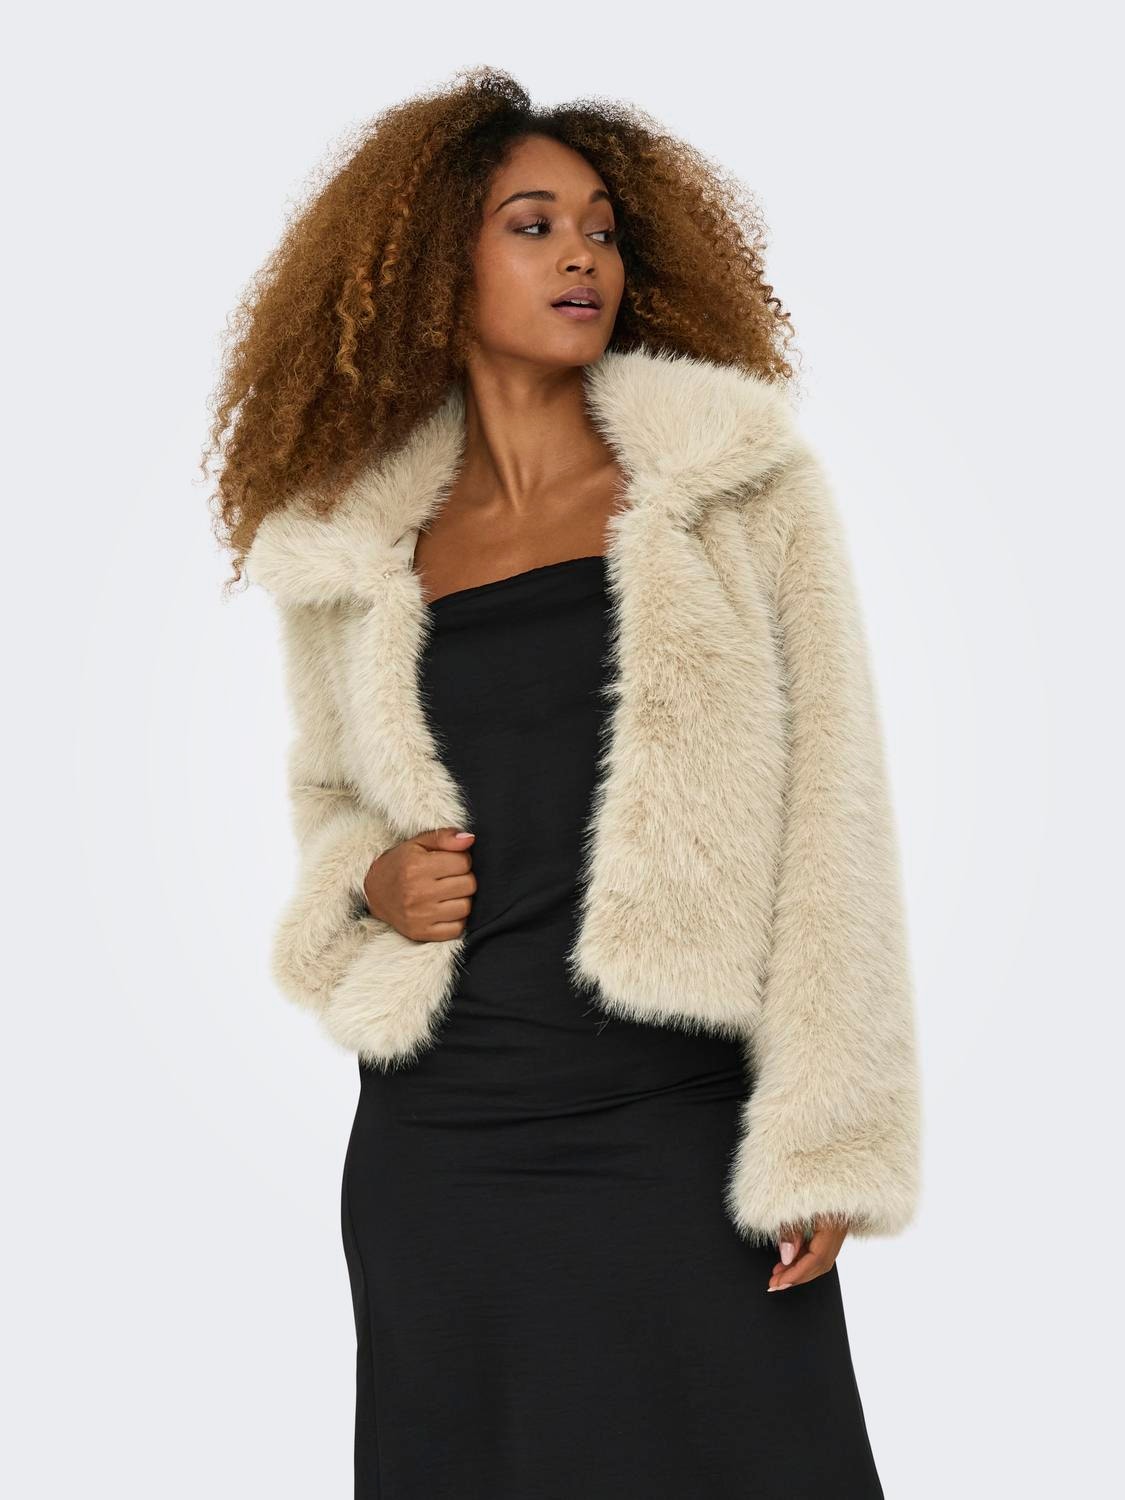 ONLY Faux fur jacket -Pumice Stone - 15328829